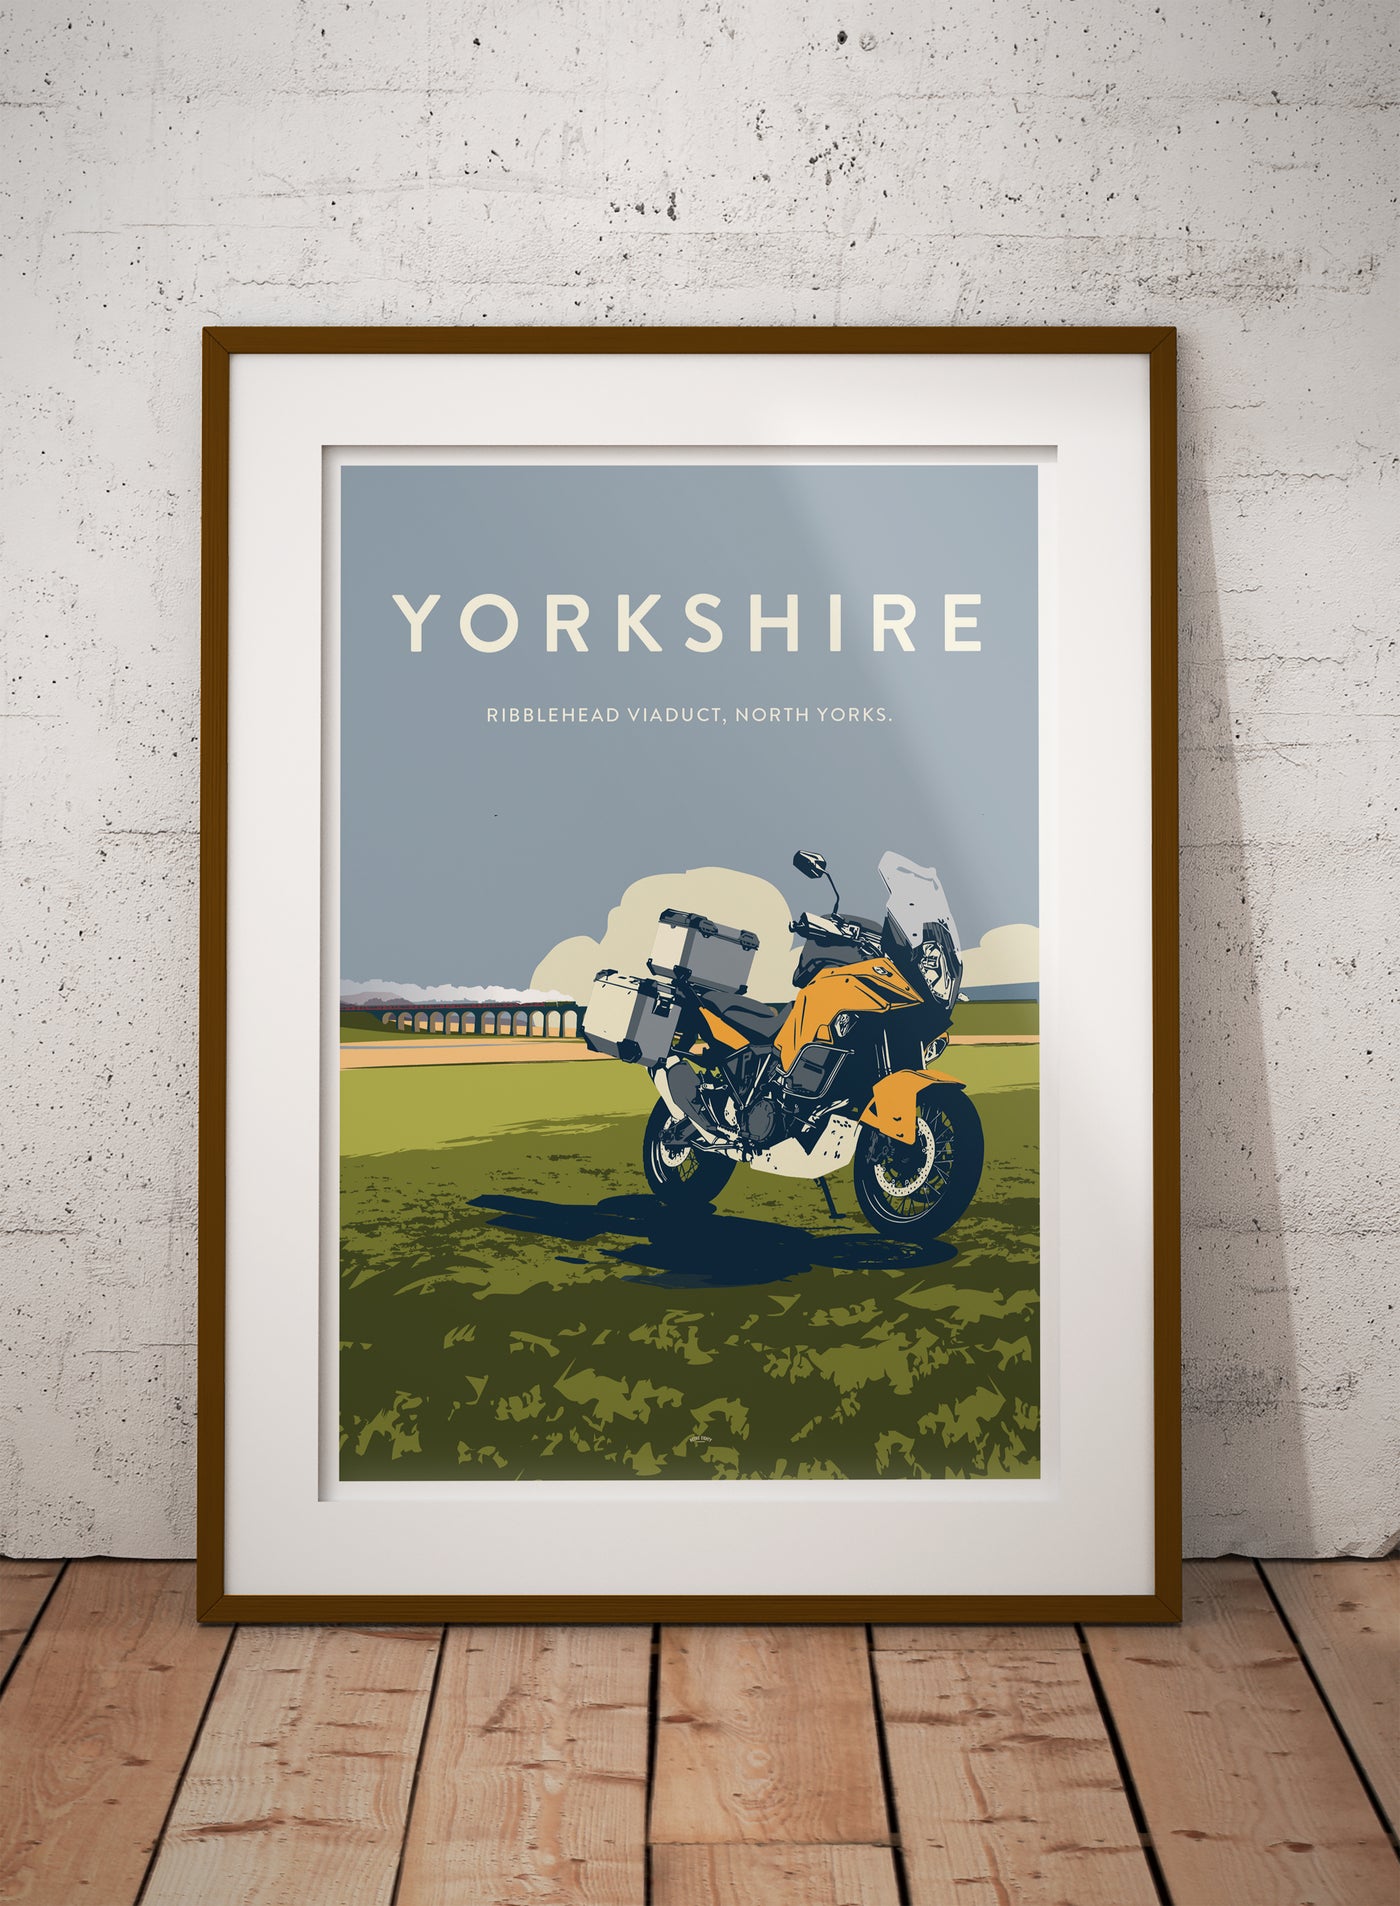 KTM Yorkshire travel poster print